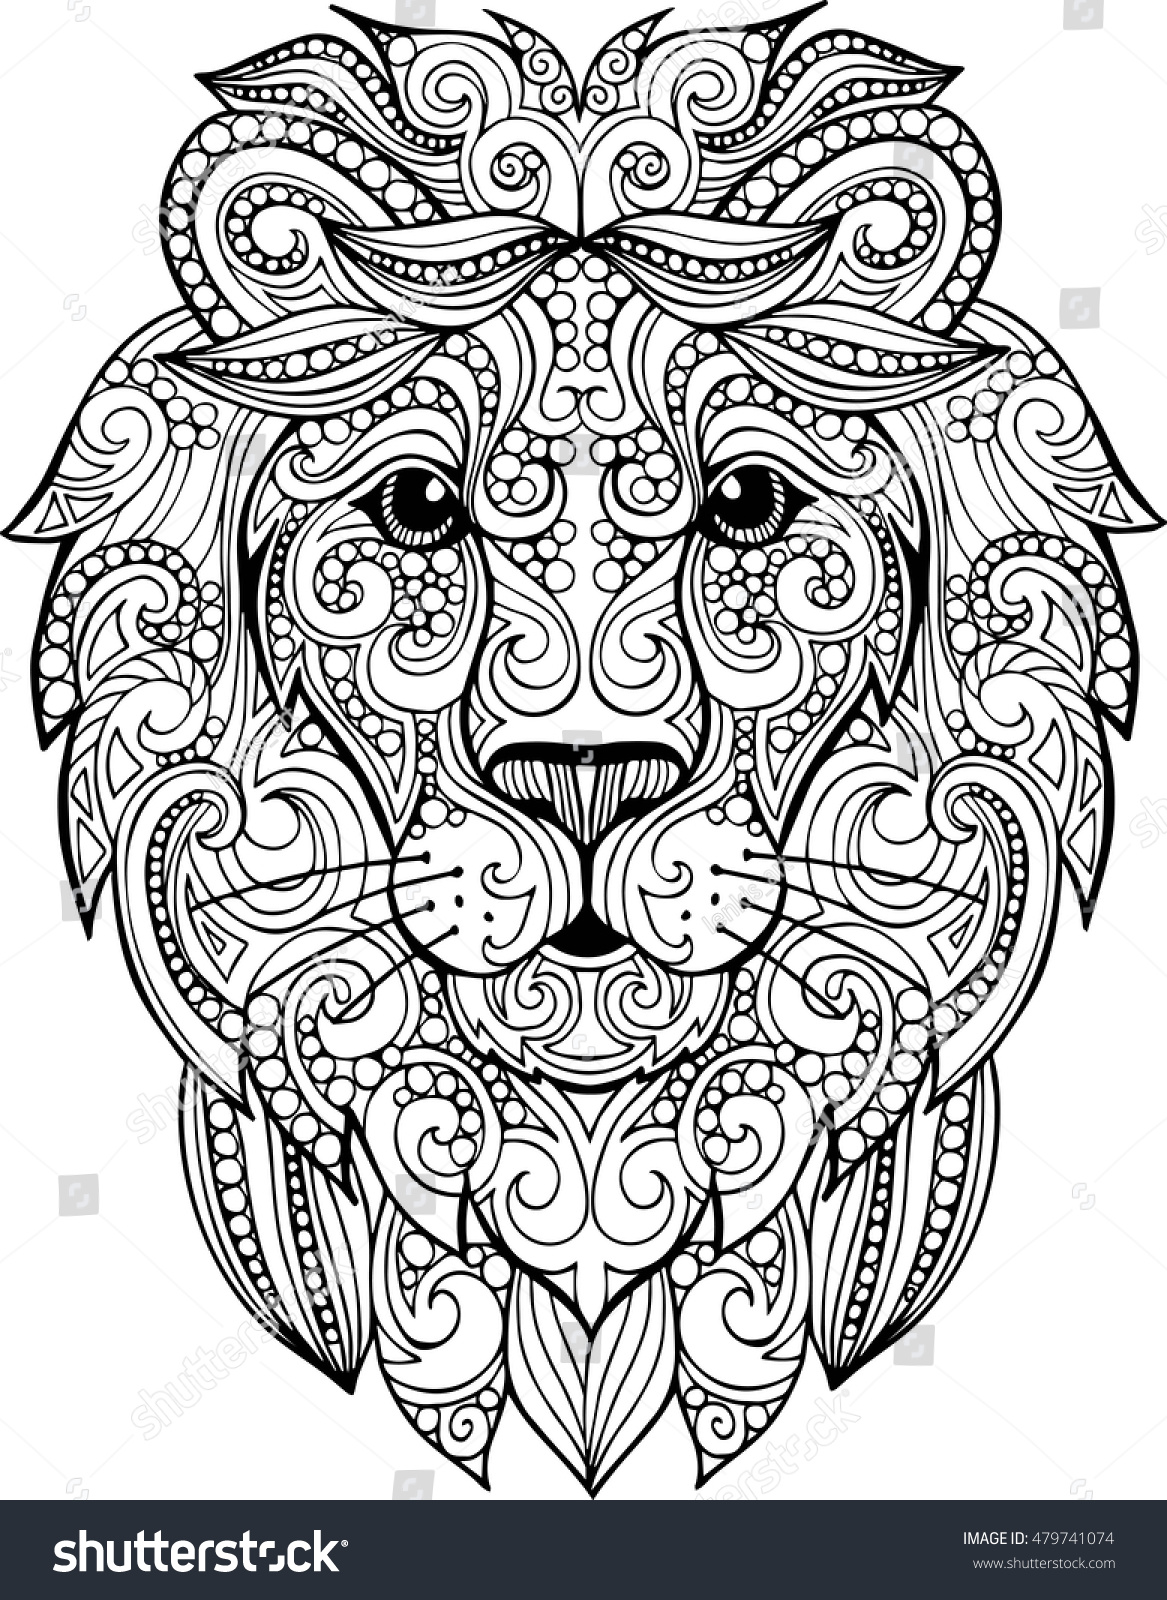 Hand Drawn Doodle Zentangle Lion Illustration Stock Vector 479741074